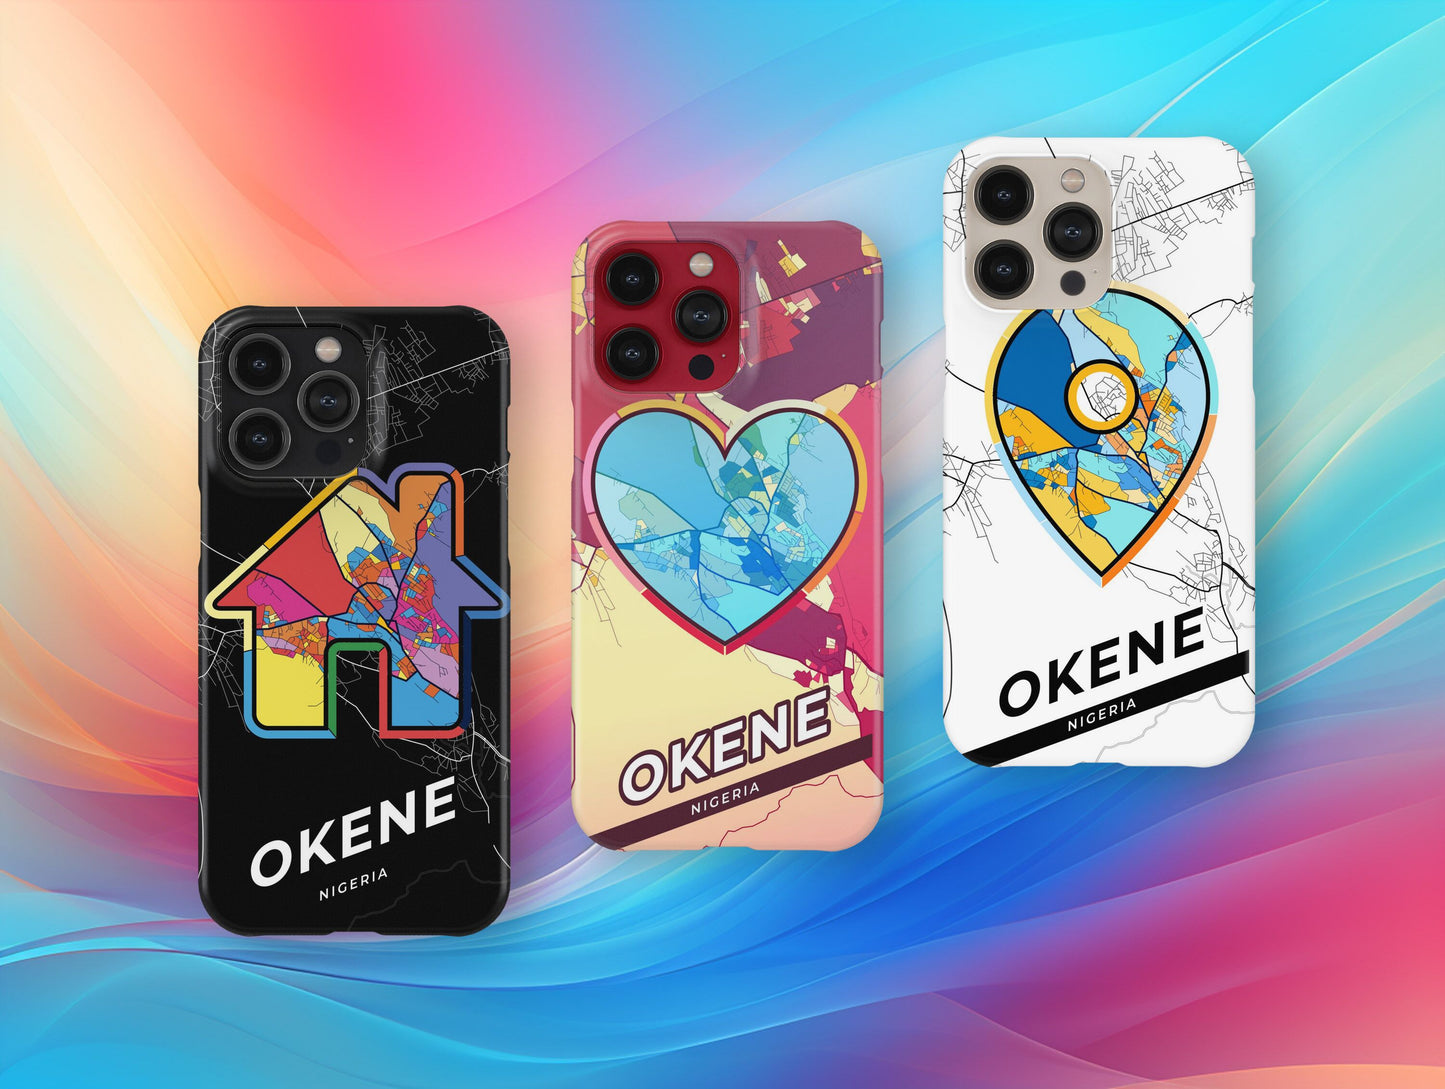 Okene Nigeria slim phone case with colorful icon